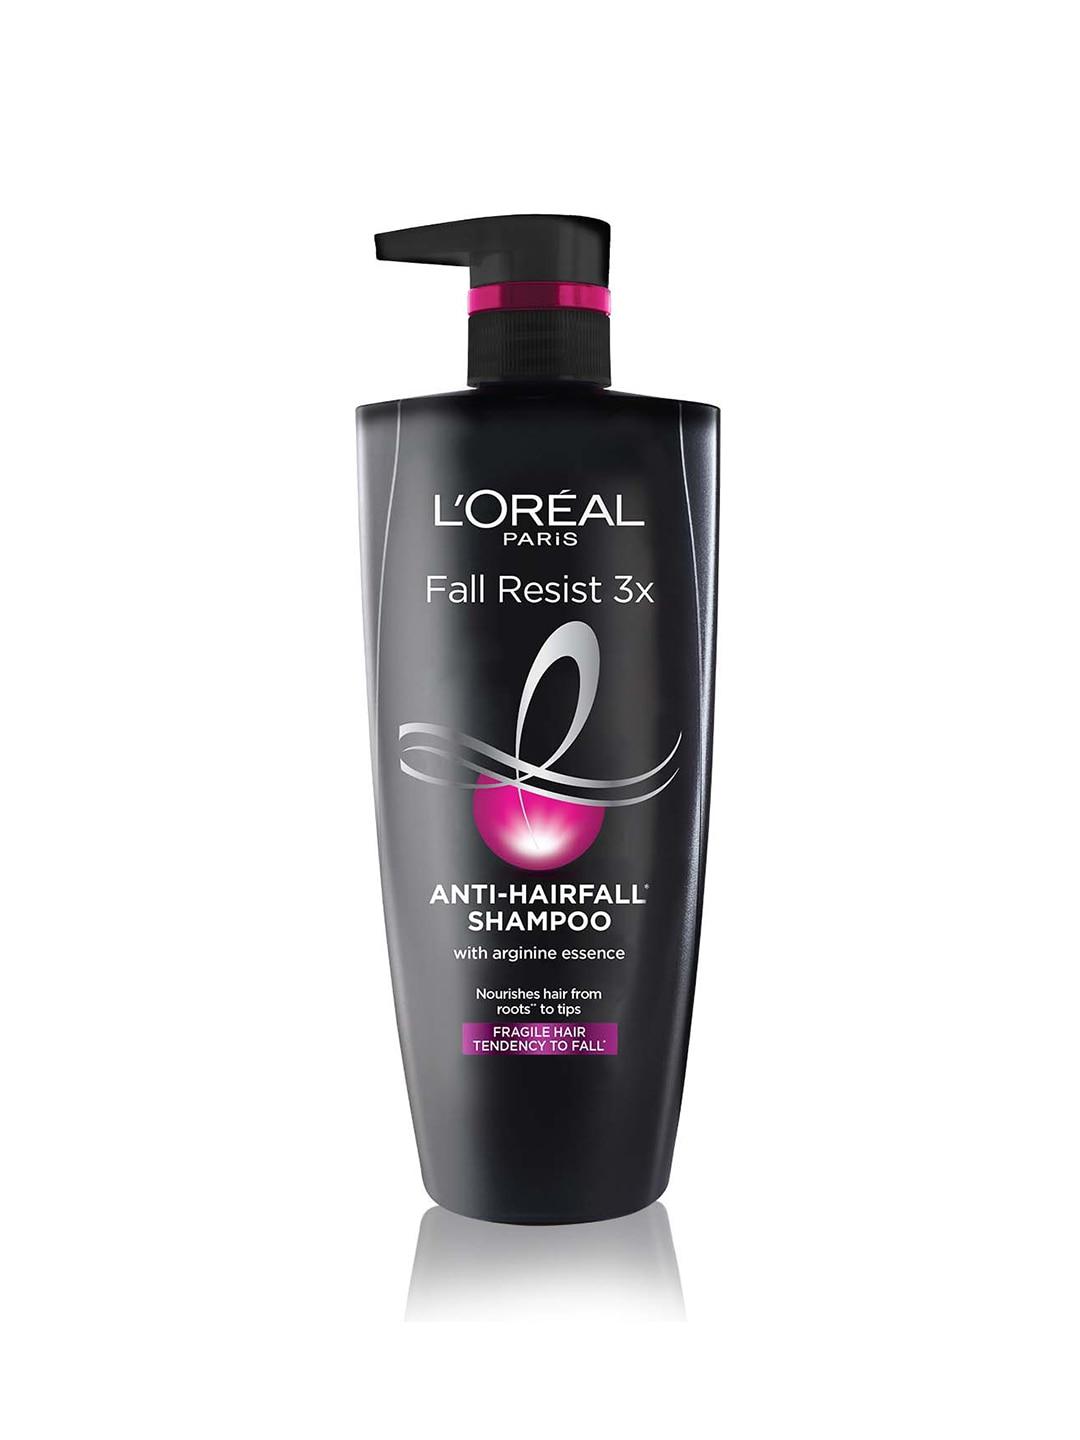 loreal paris fall resist 3x anti-hairfall shampoo with arginine essence - 650ml